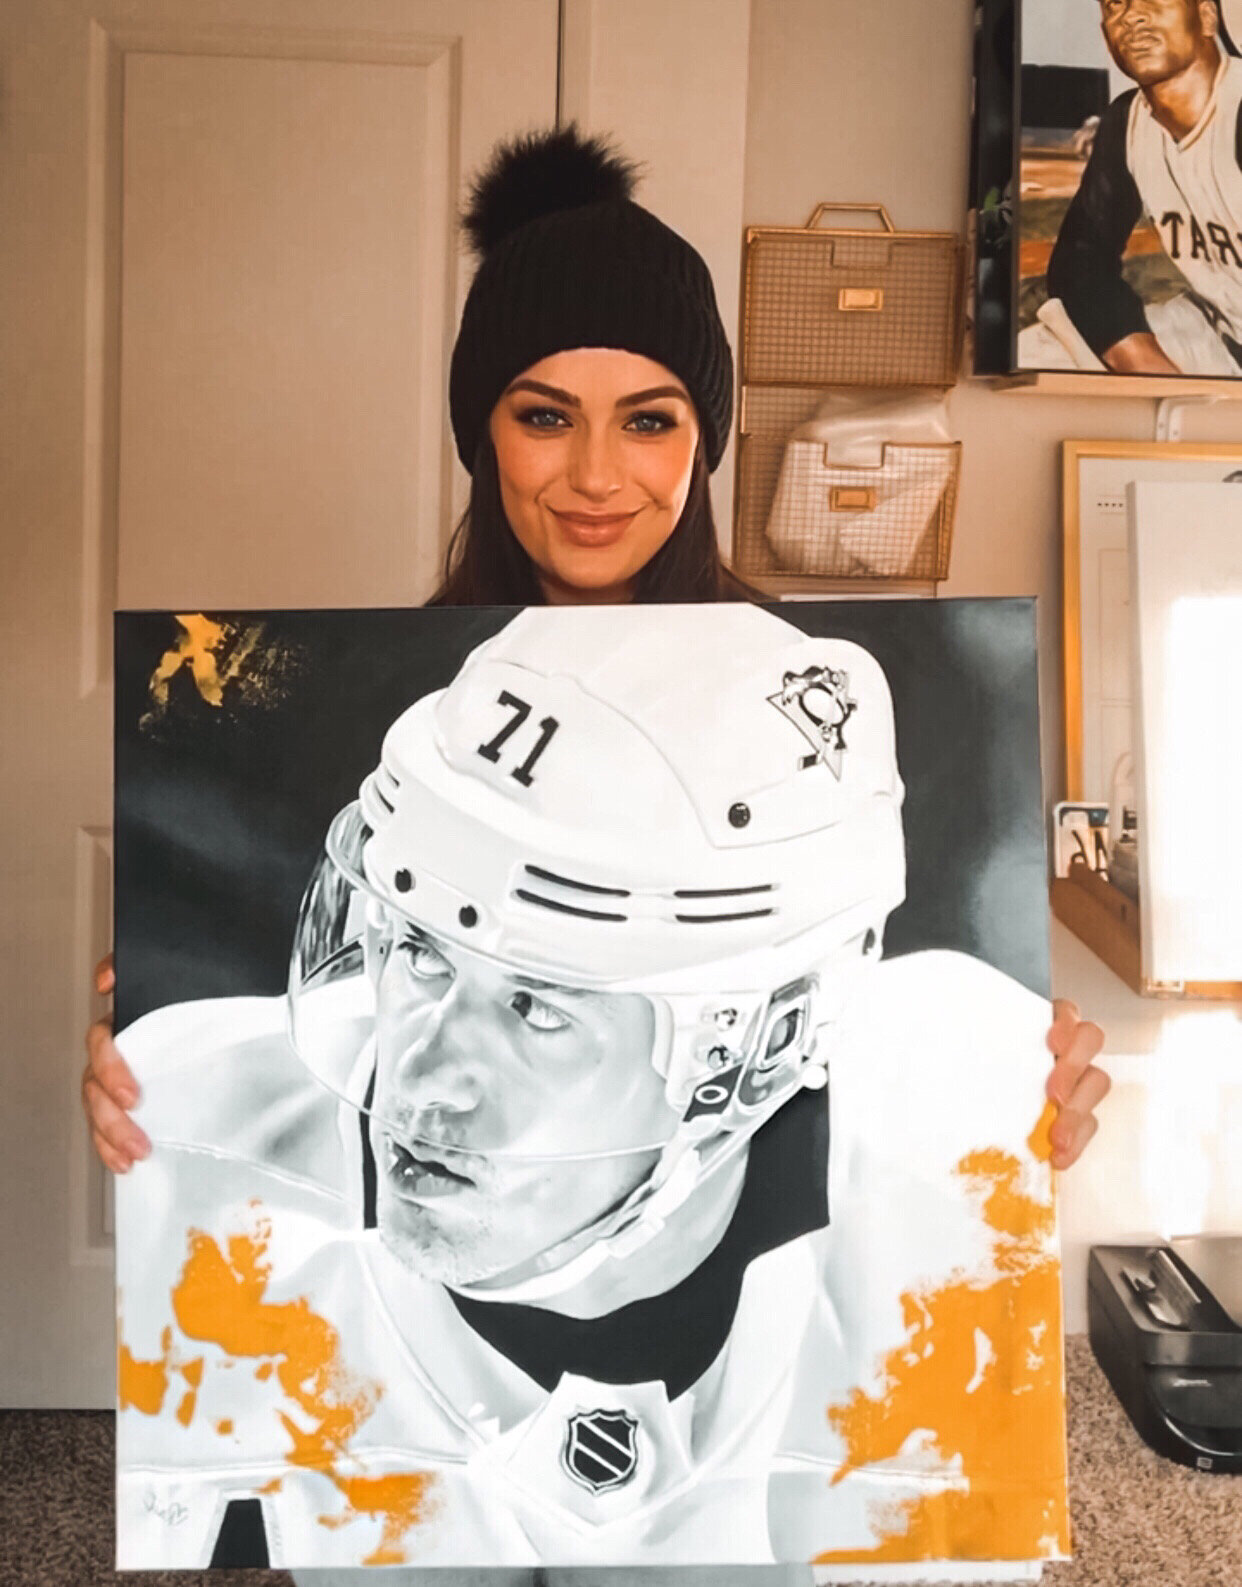 Evgeni Malkin Jersey NHL Fan Apparel & Souvenirs for sale